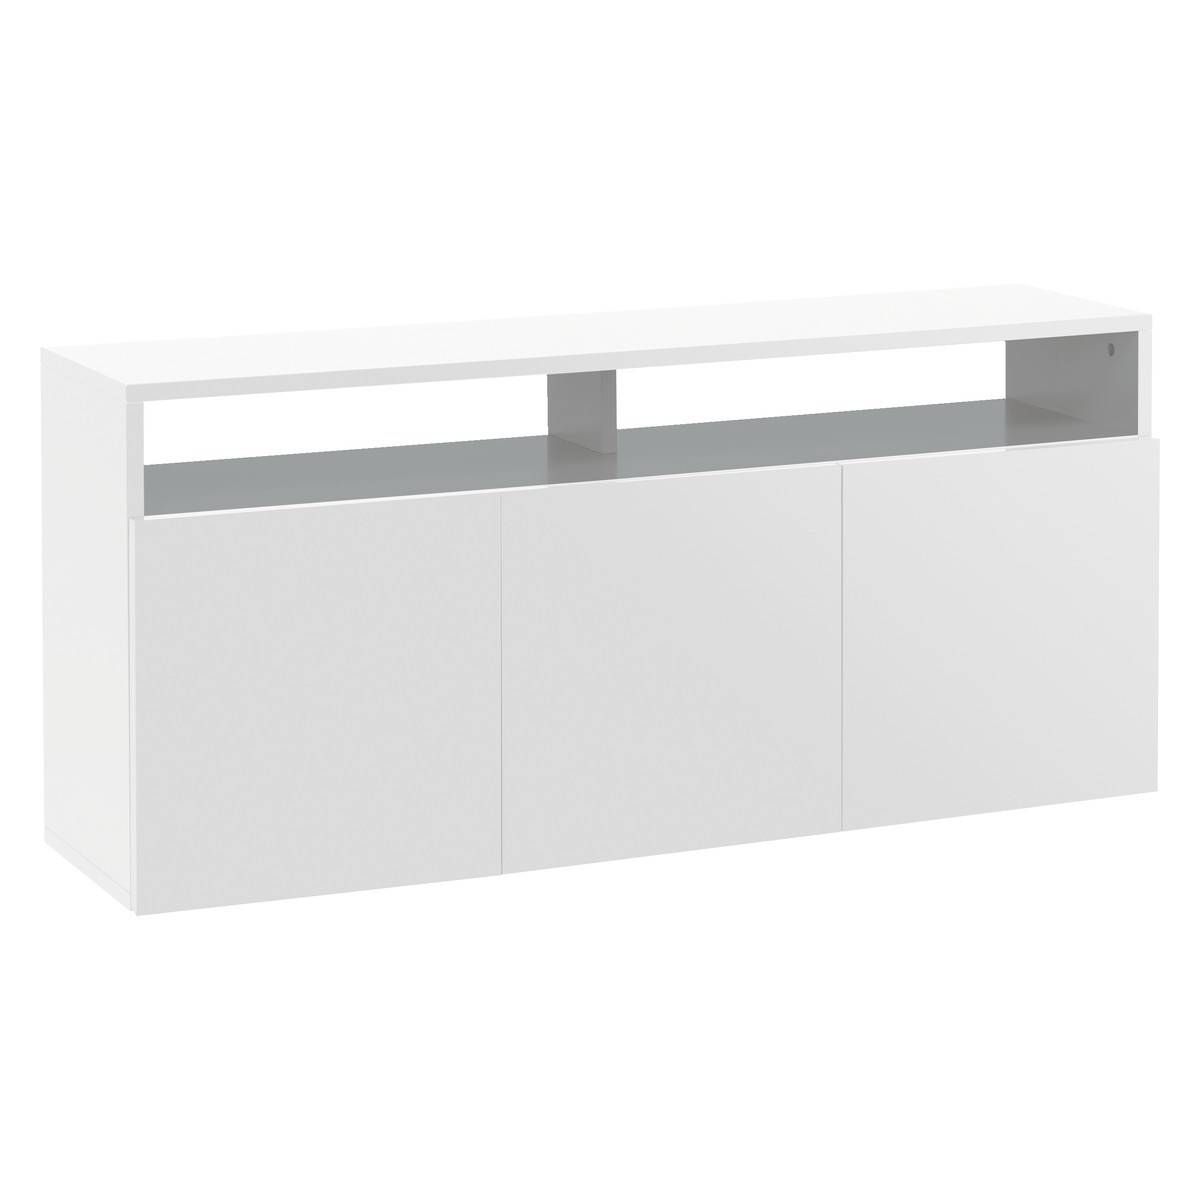 Kubrik White High Gloss Large Sideboard | Buy Now At Habitat Uk Inside White Wood Sideboard (View 6 of 20)